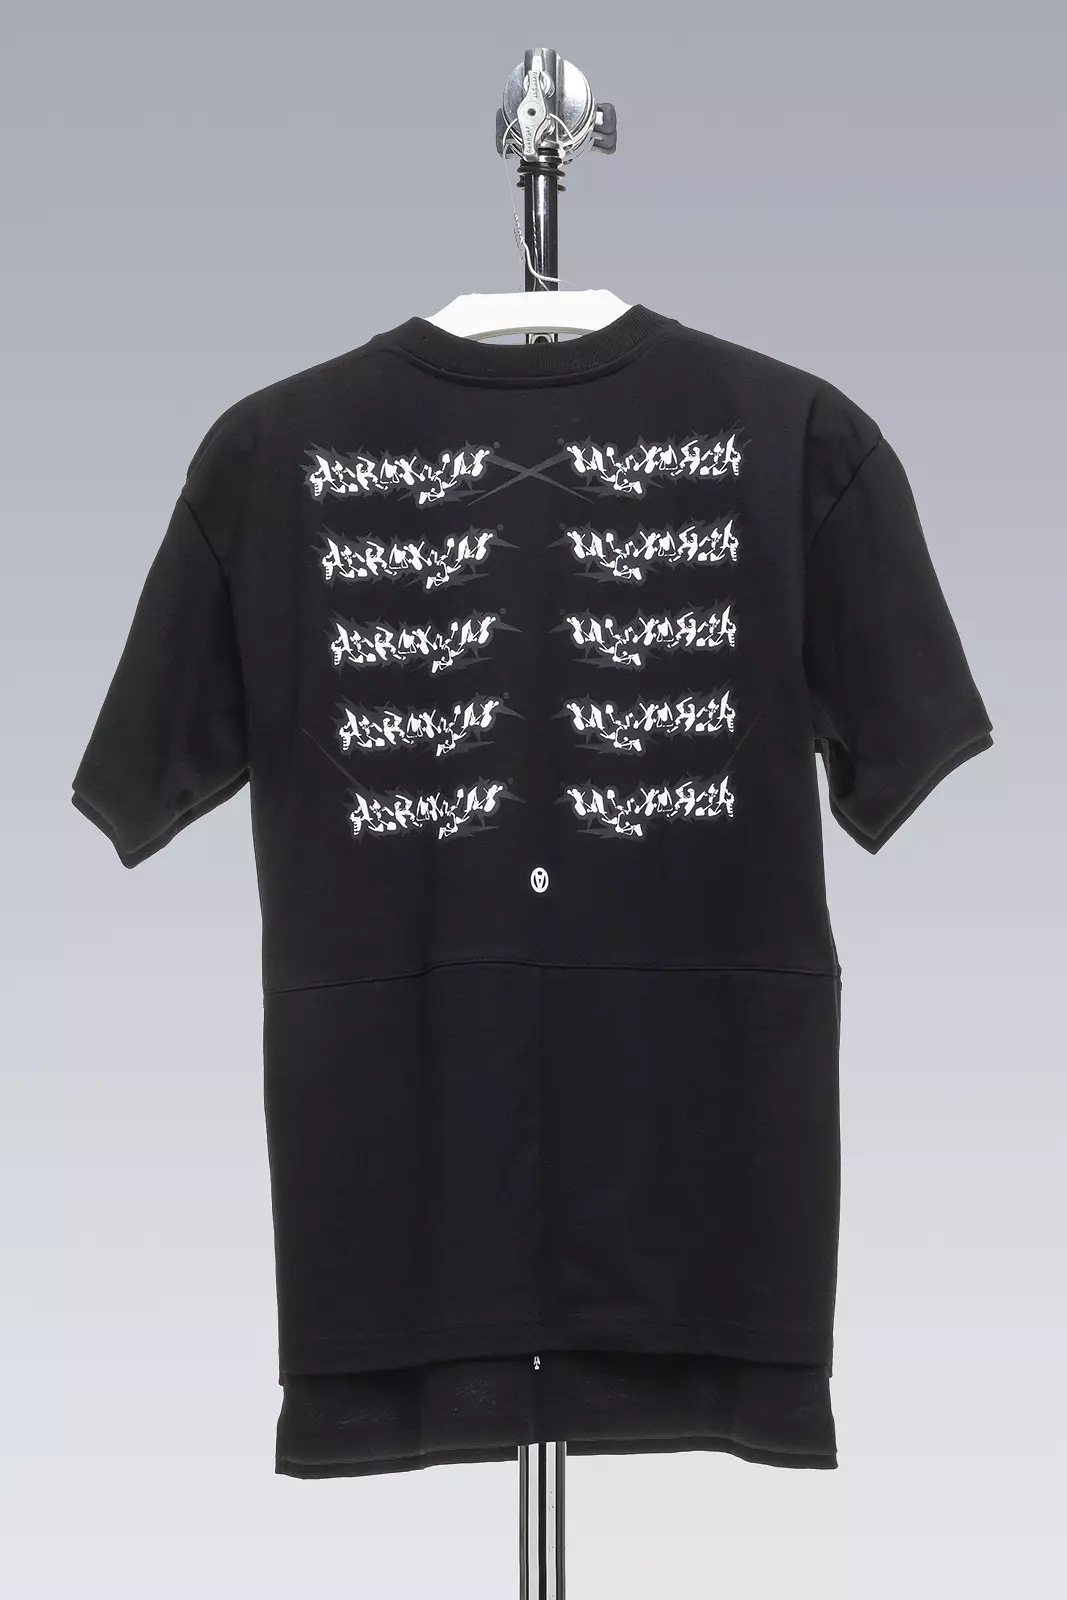 S28-PR-A 100% Orgnaic Cotton Short Sleeve T-shirt Black - 2